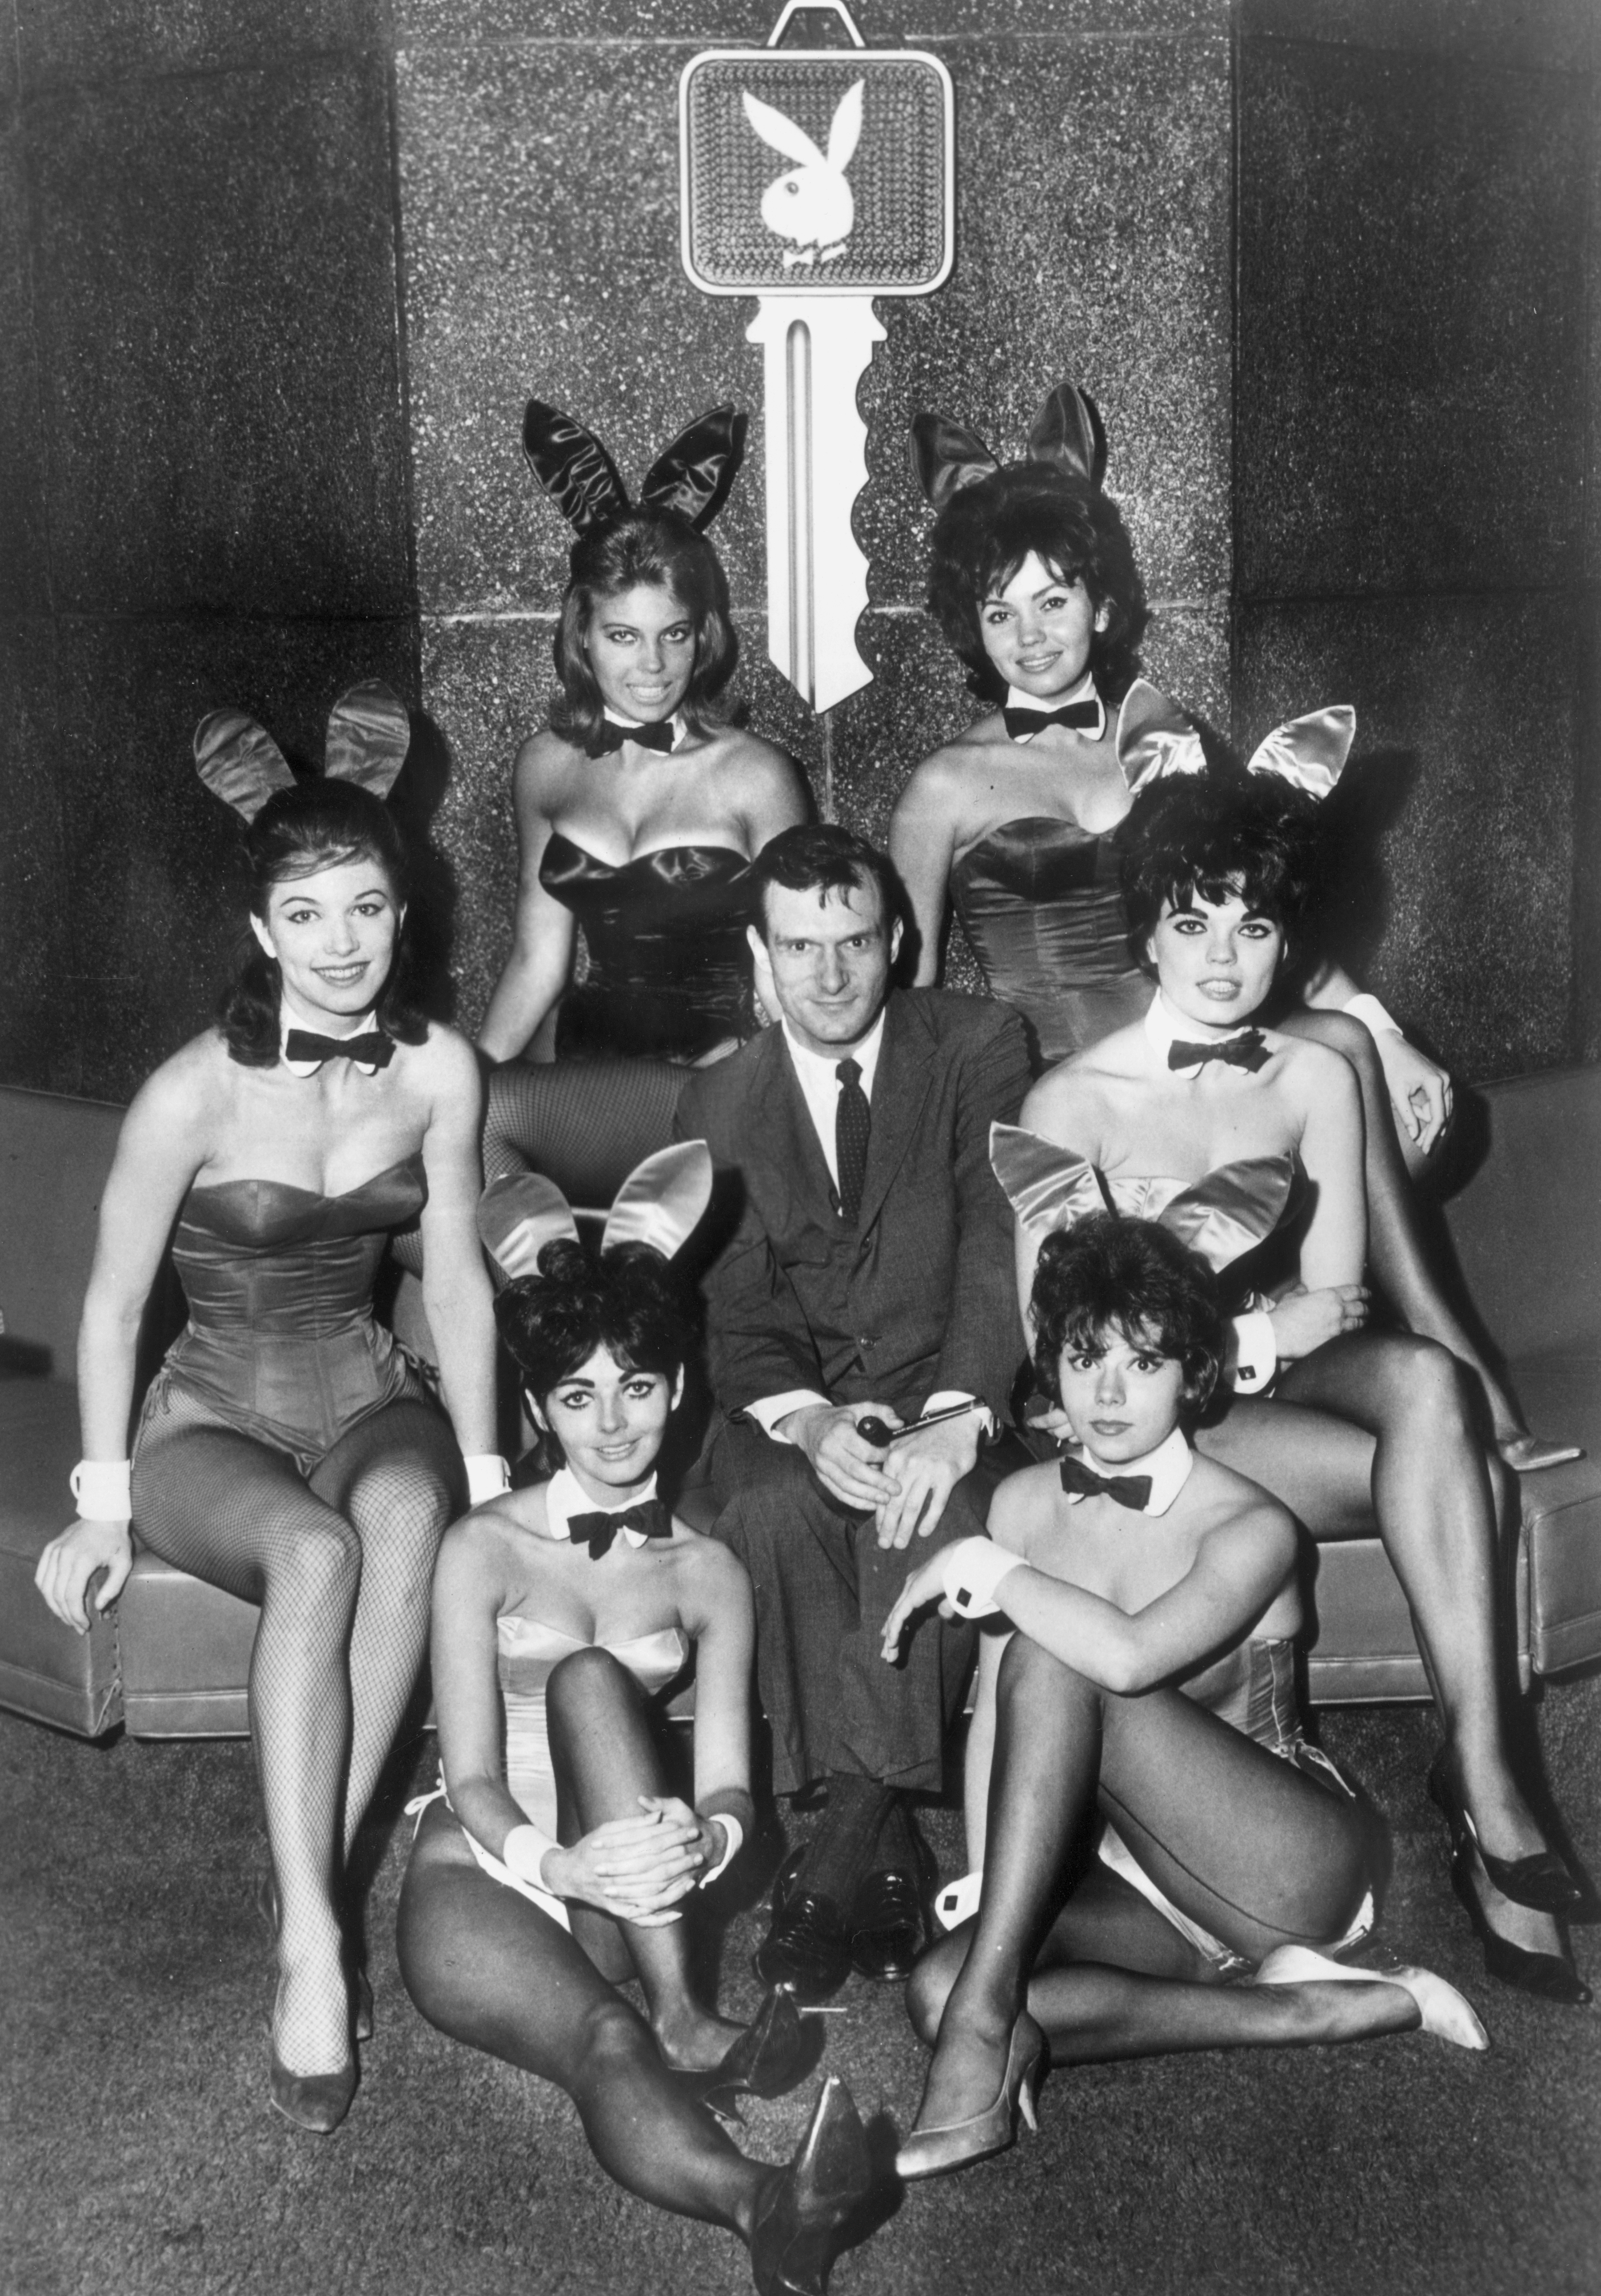 Hugh with Playboy bunnies